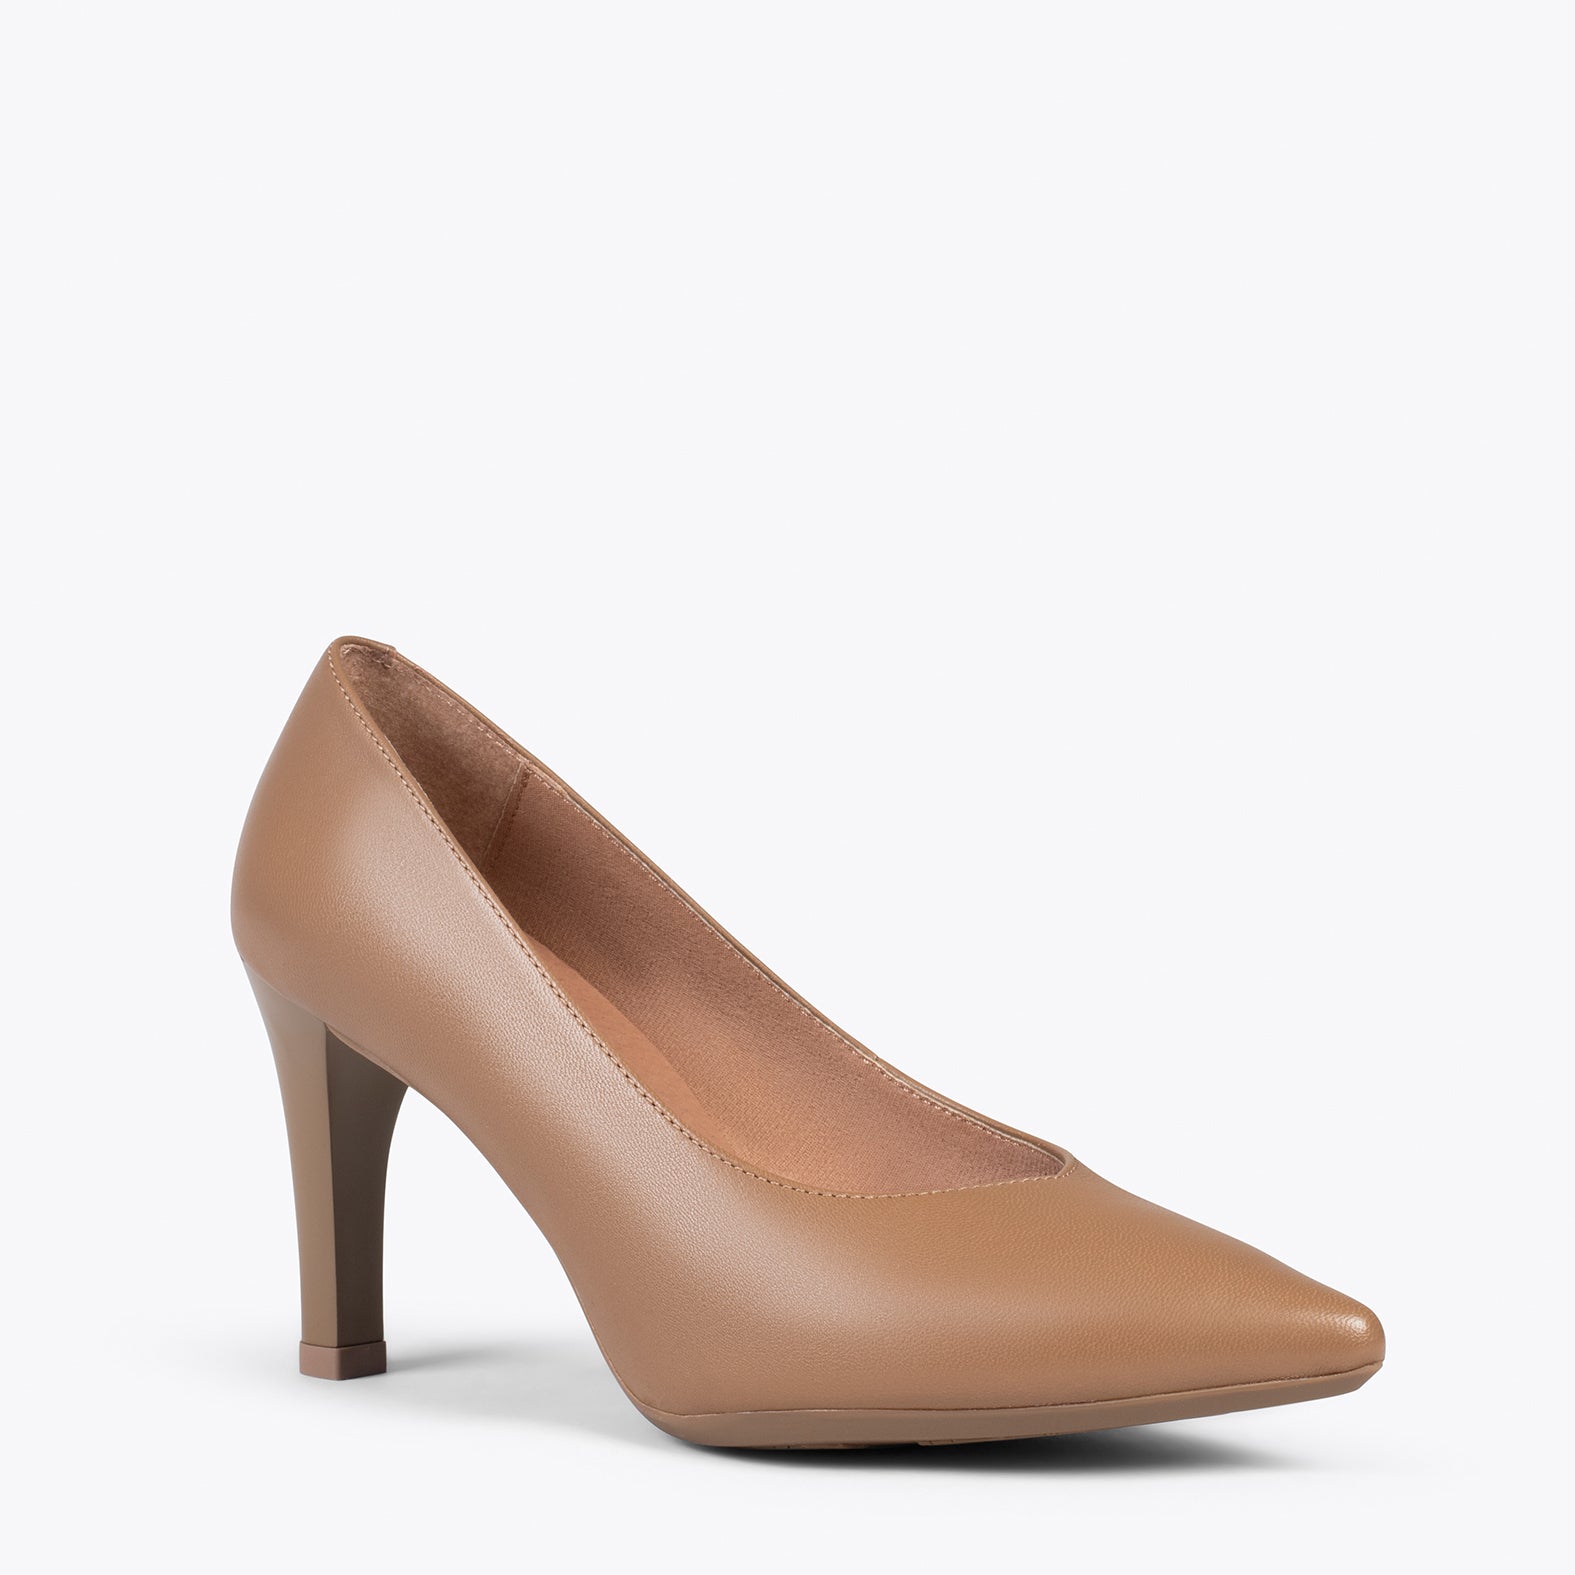 GLAM – CAMEL elegant high heels